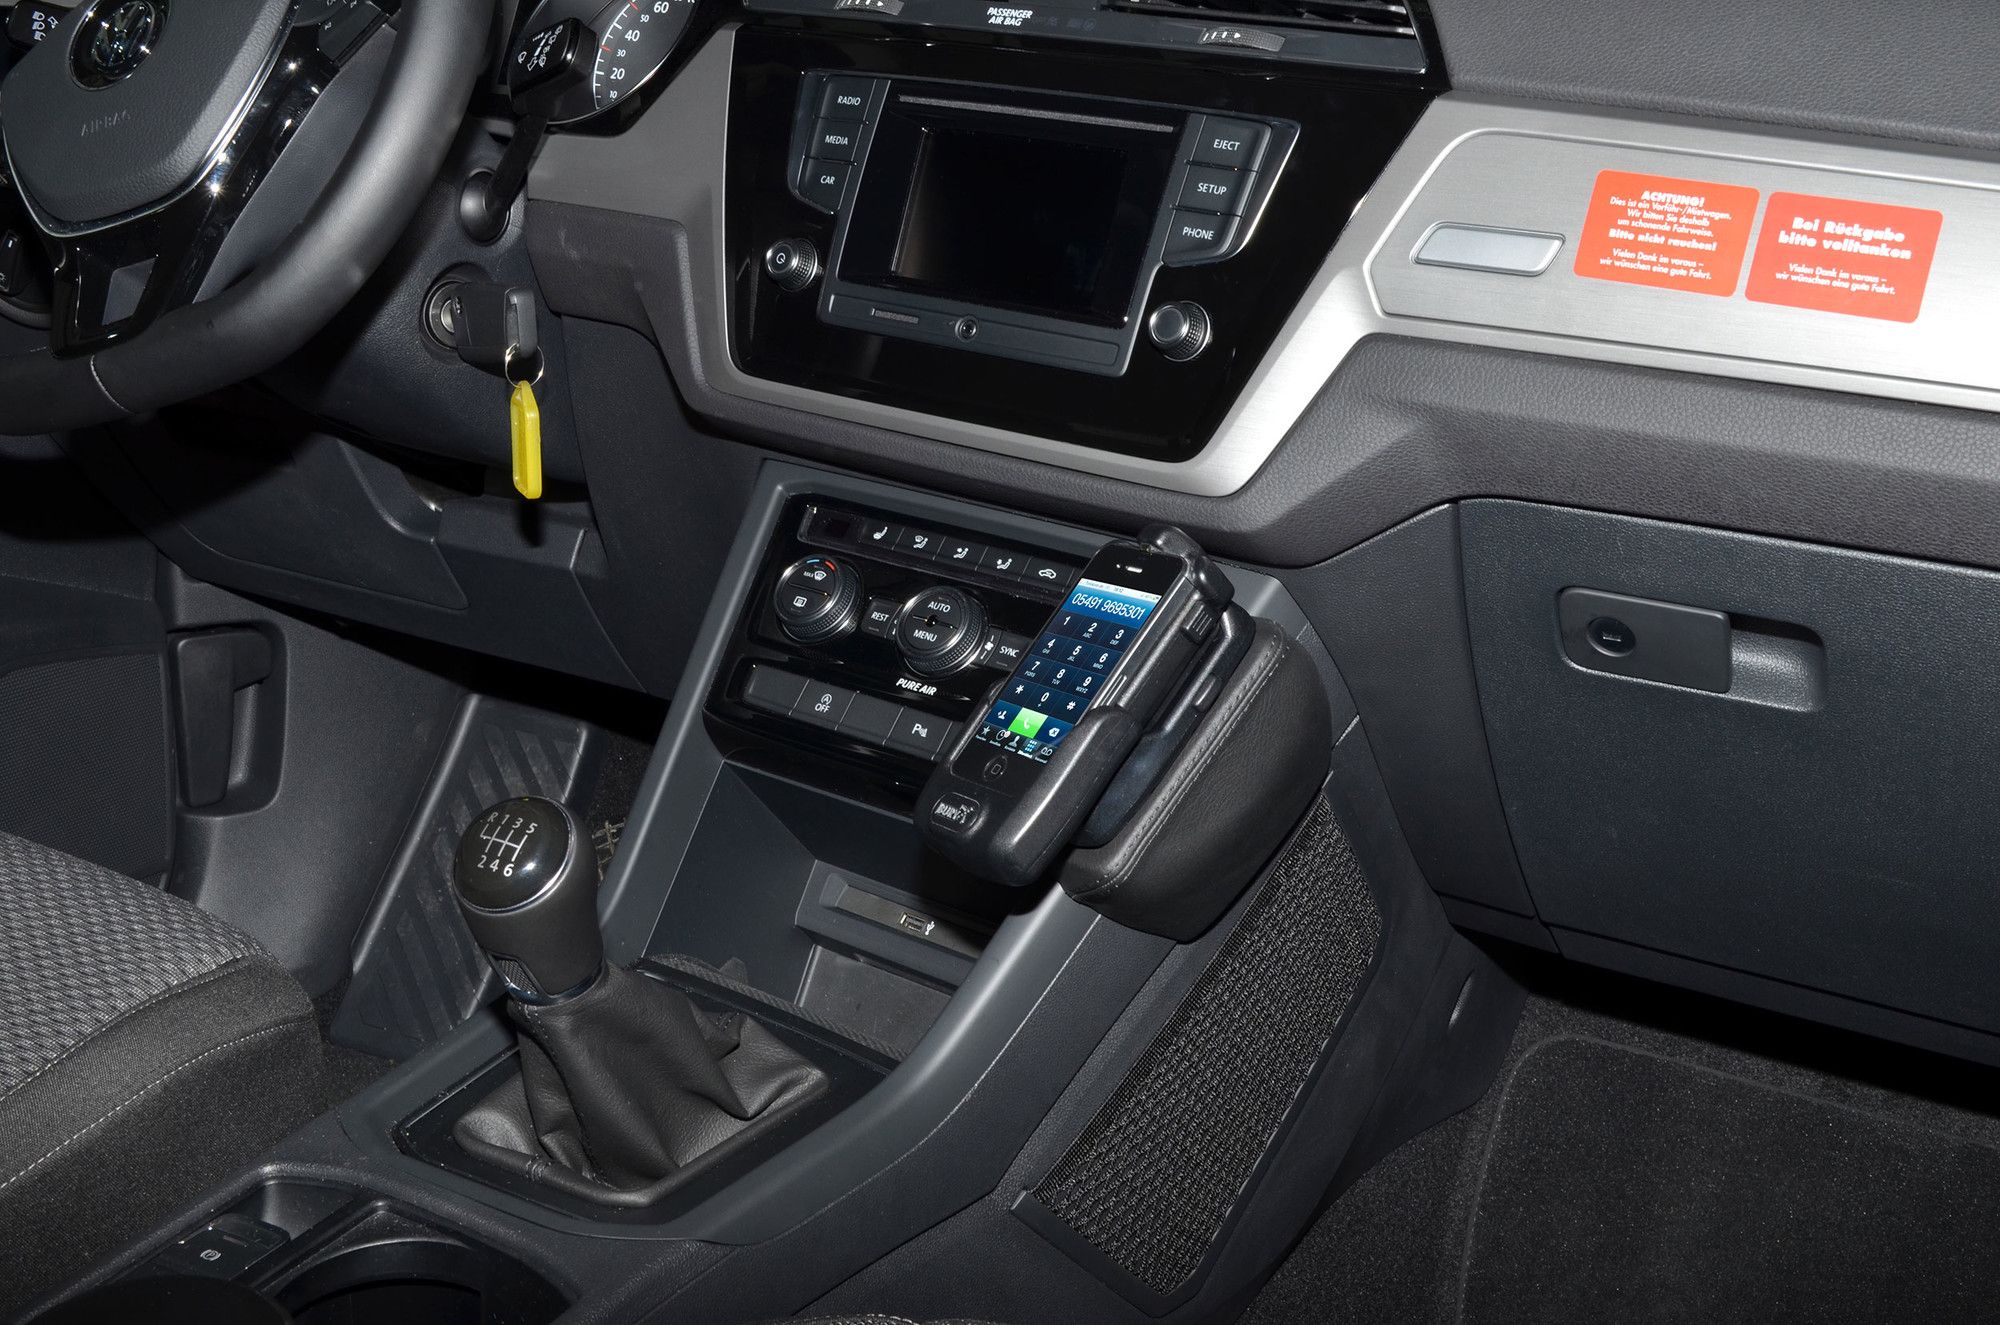 Kuda console VW Touran 2015- Zwart montage onder